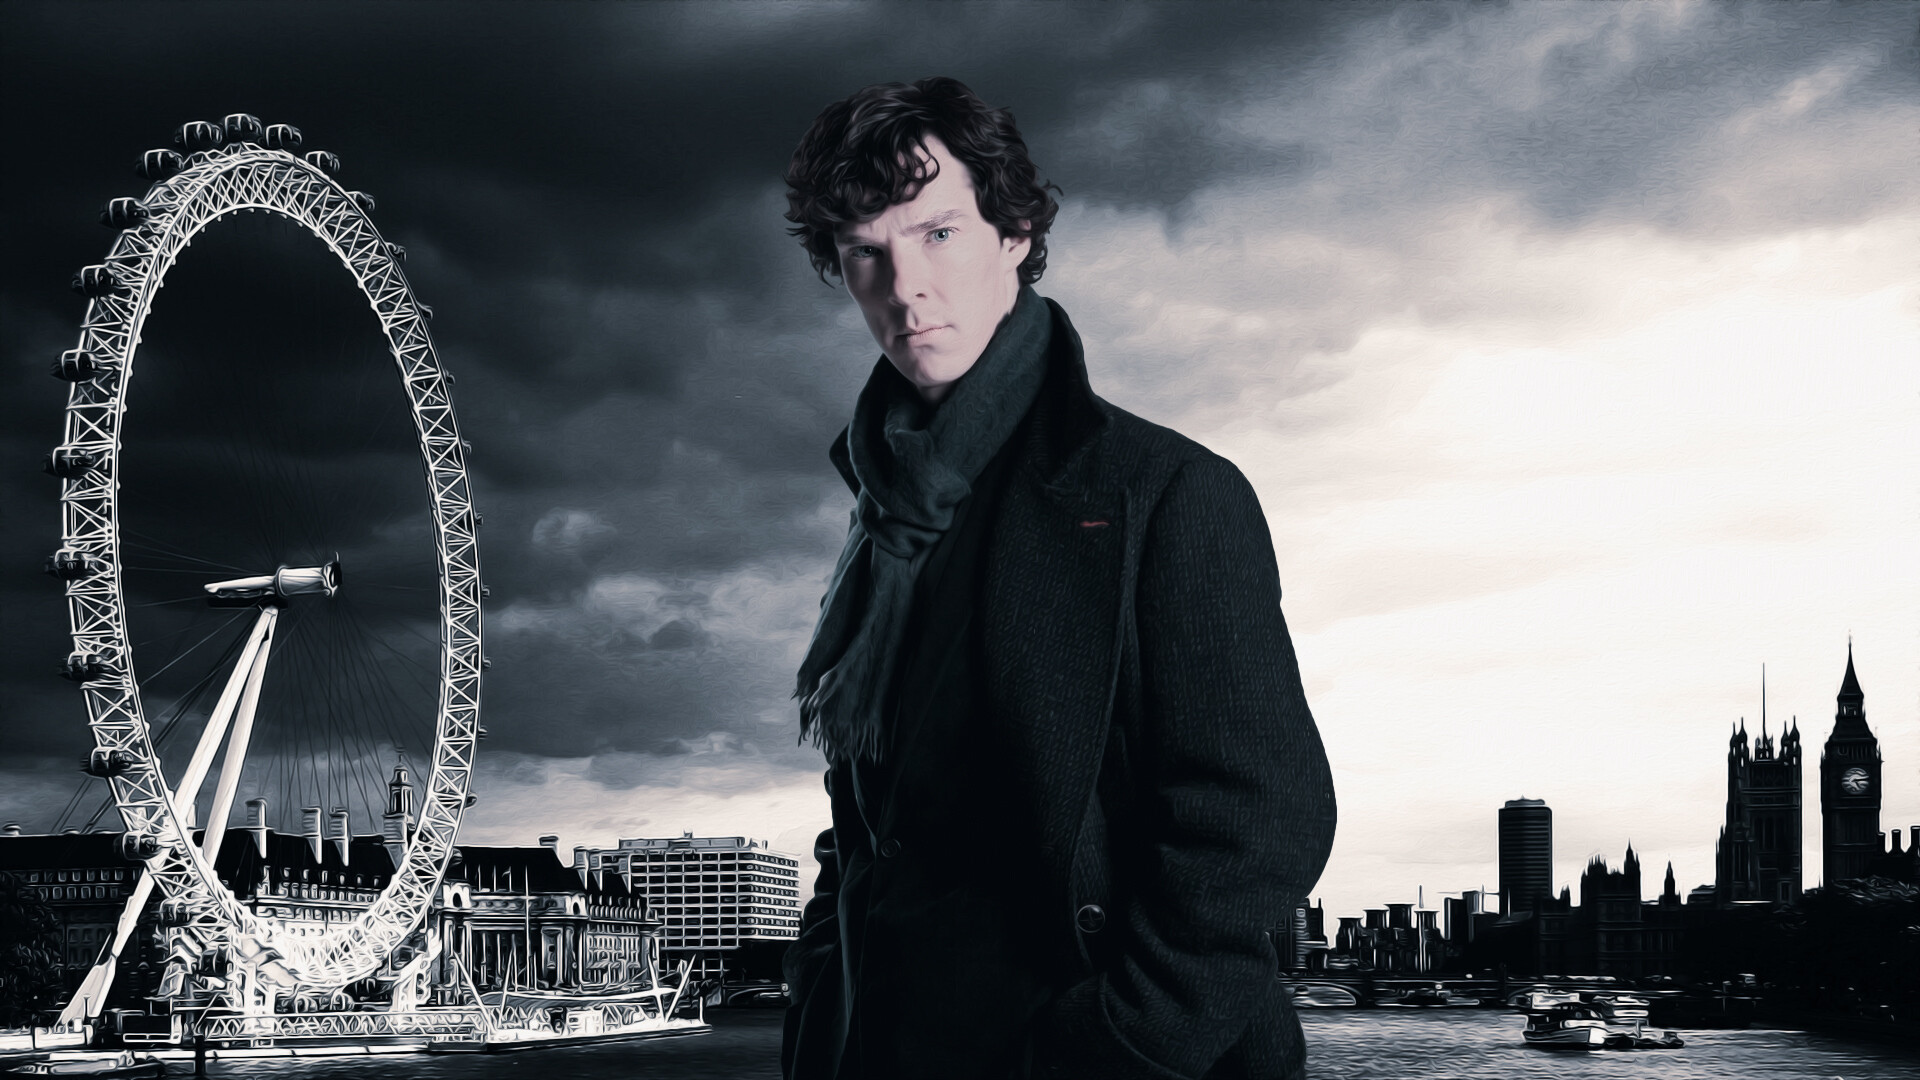 Sherlock (TV Series): Sherlock Holmes and Dr. John Watson solve mysteries in a modern-day London. 1920x1080 Full HD Background.